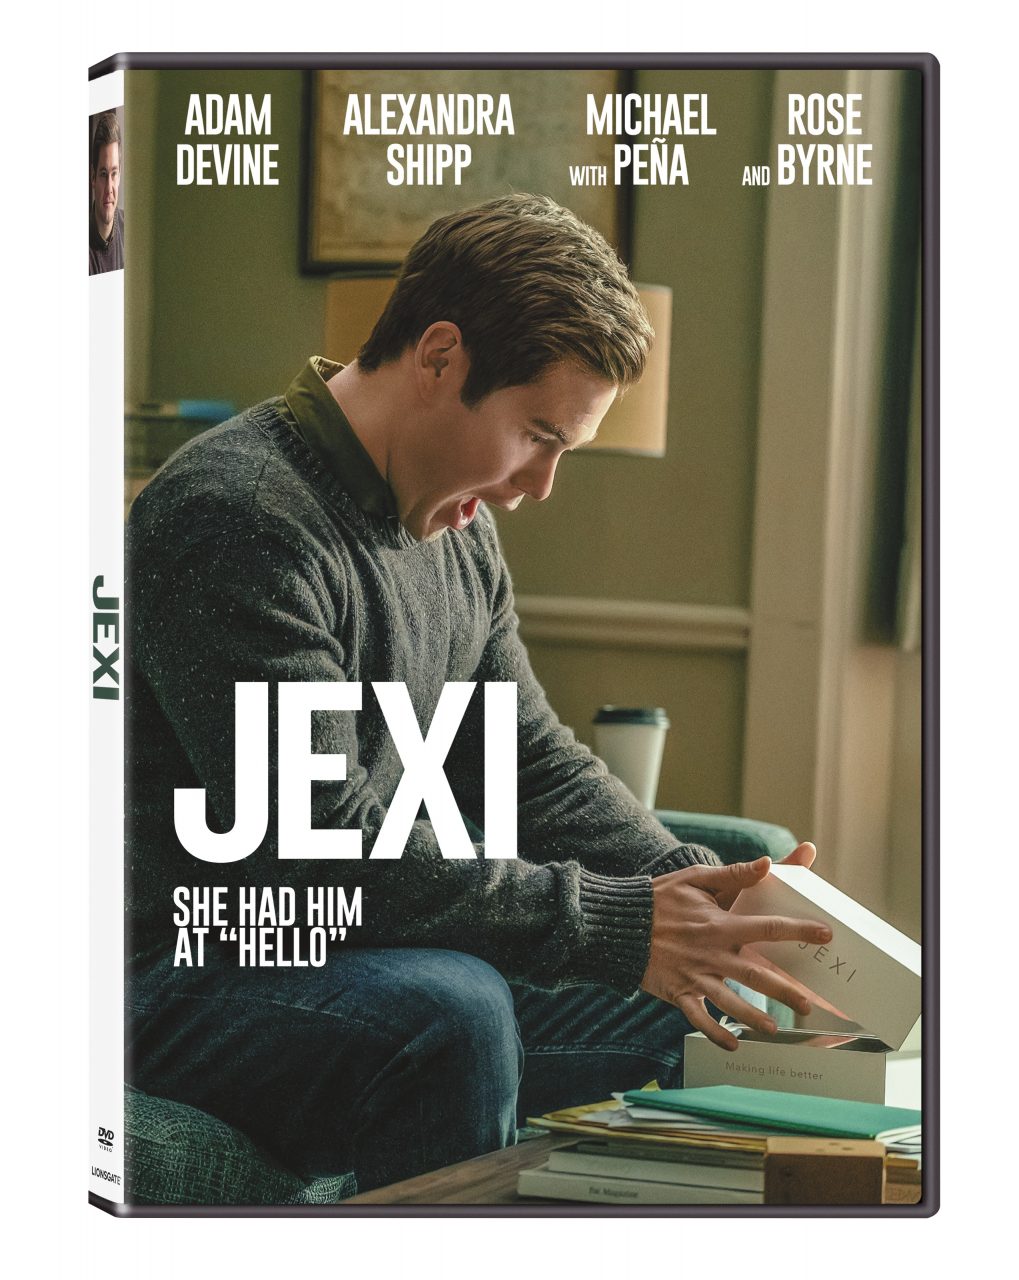 JEXI DVD cover (Lionsgate Home Entertainment)